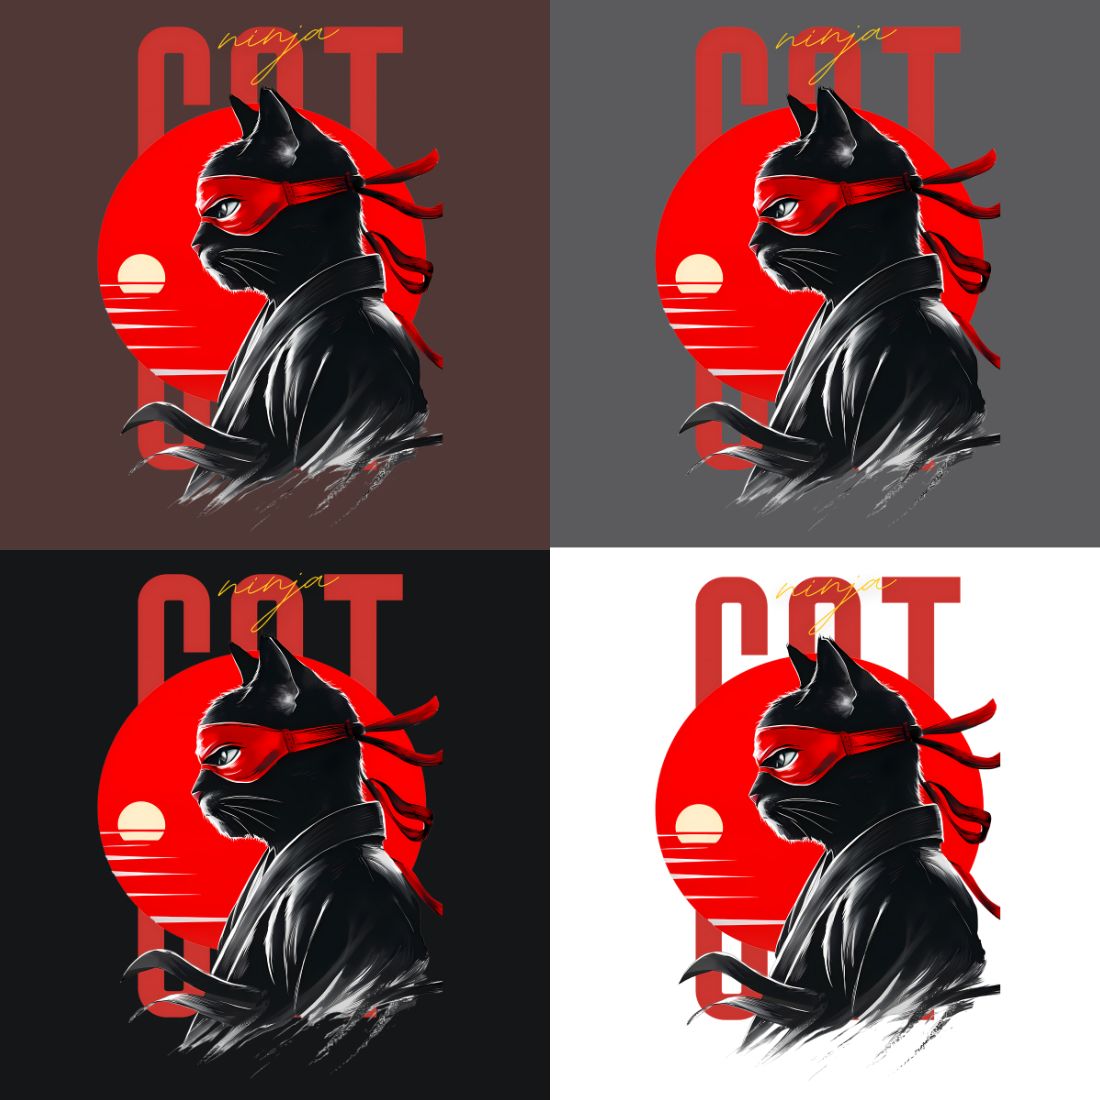 Ninja CAT T-shirt Graphics cover image.